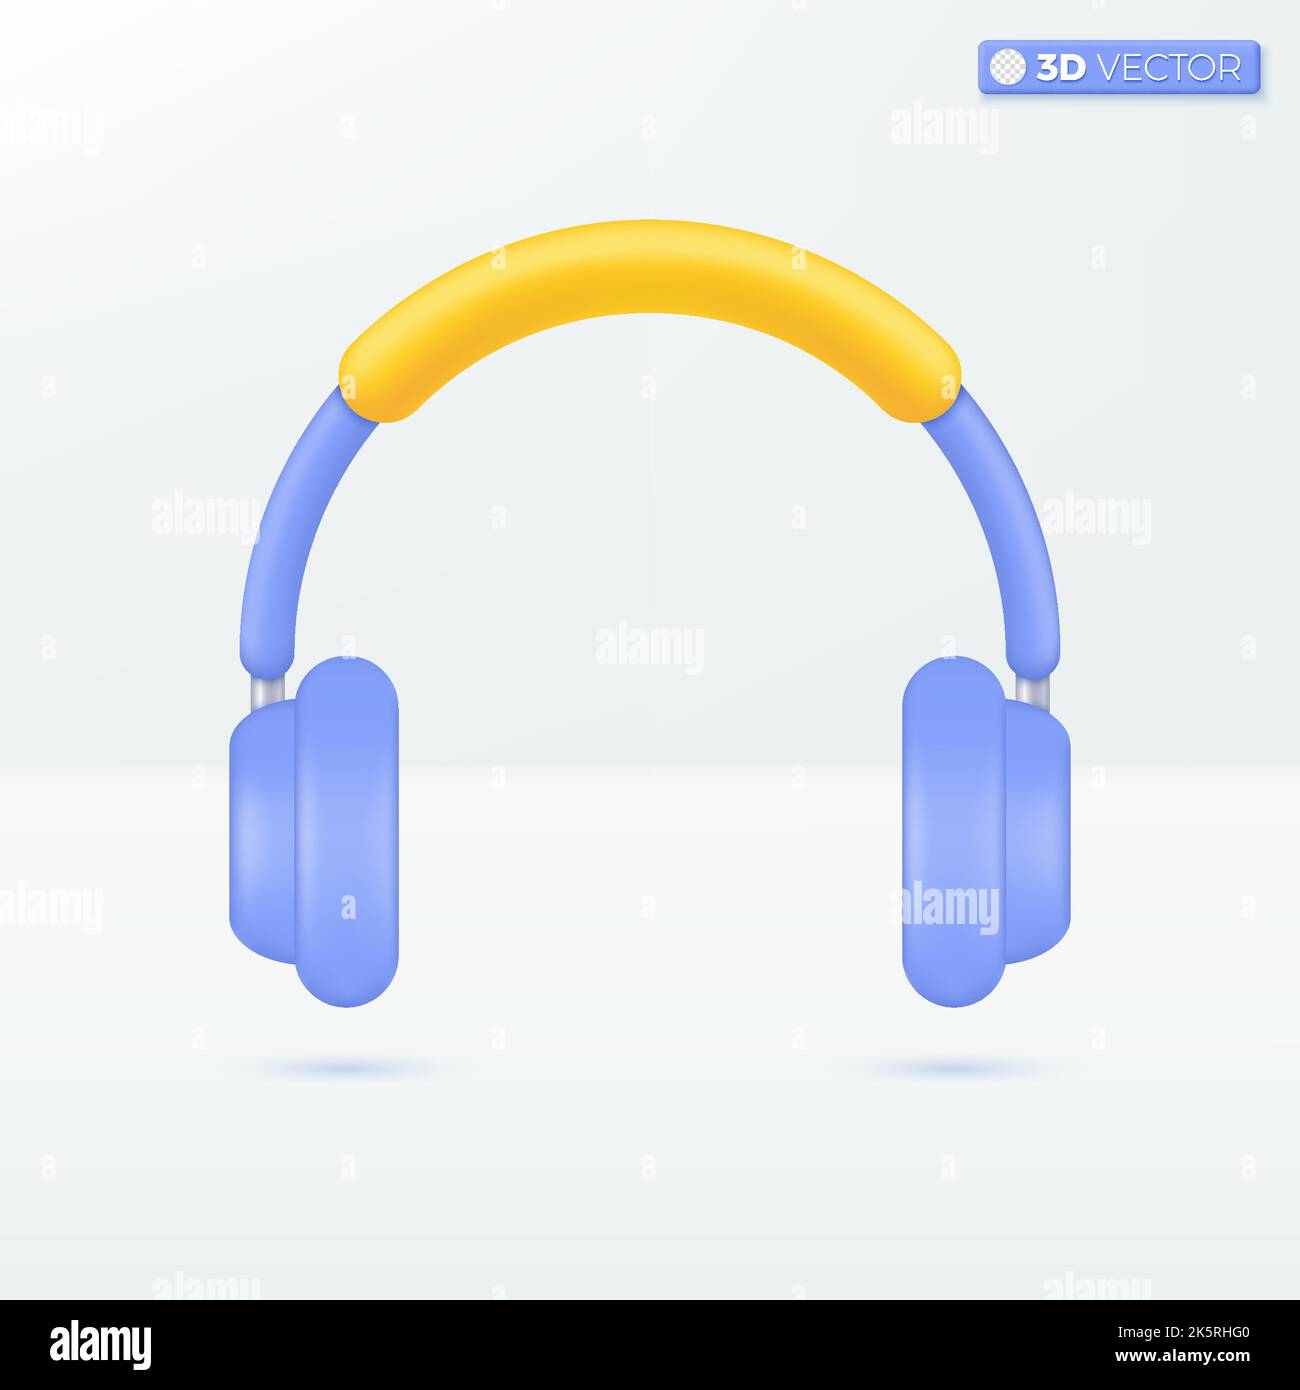 Wireless headphones icon symbols. music, Audio gadget, listening, electronic device concept. 3D vector isolated illustration design. Cartoon pastel Mi Stock Vector